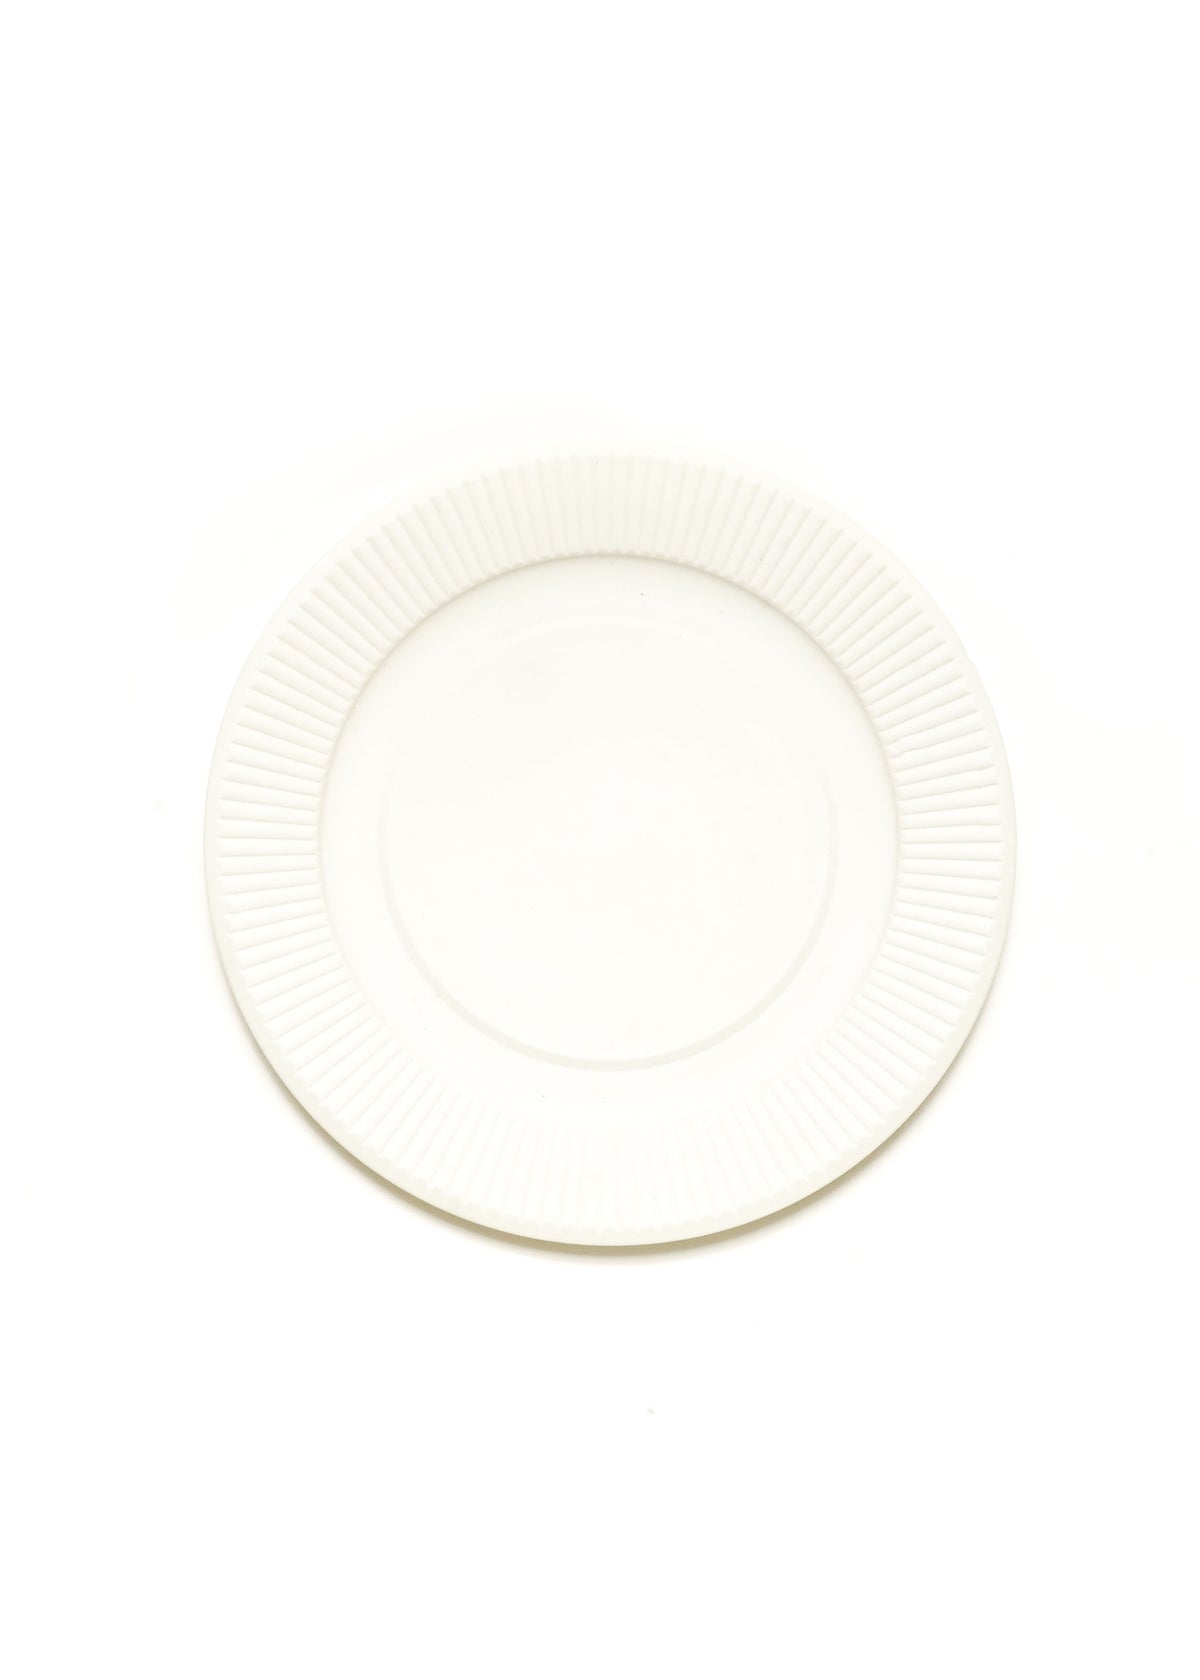 KAMIZARA ( Arita-yaki / Paper Plate / Porcelain)